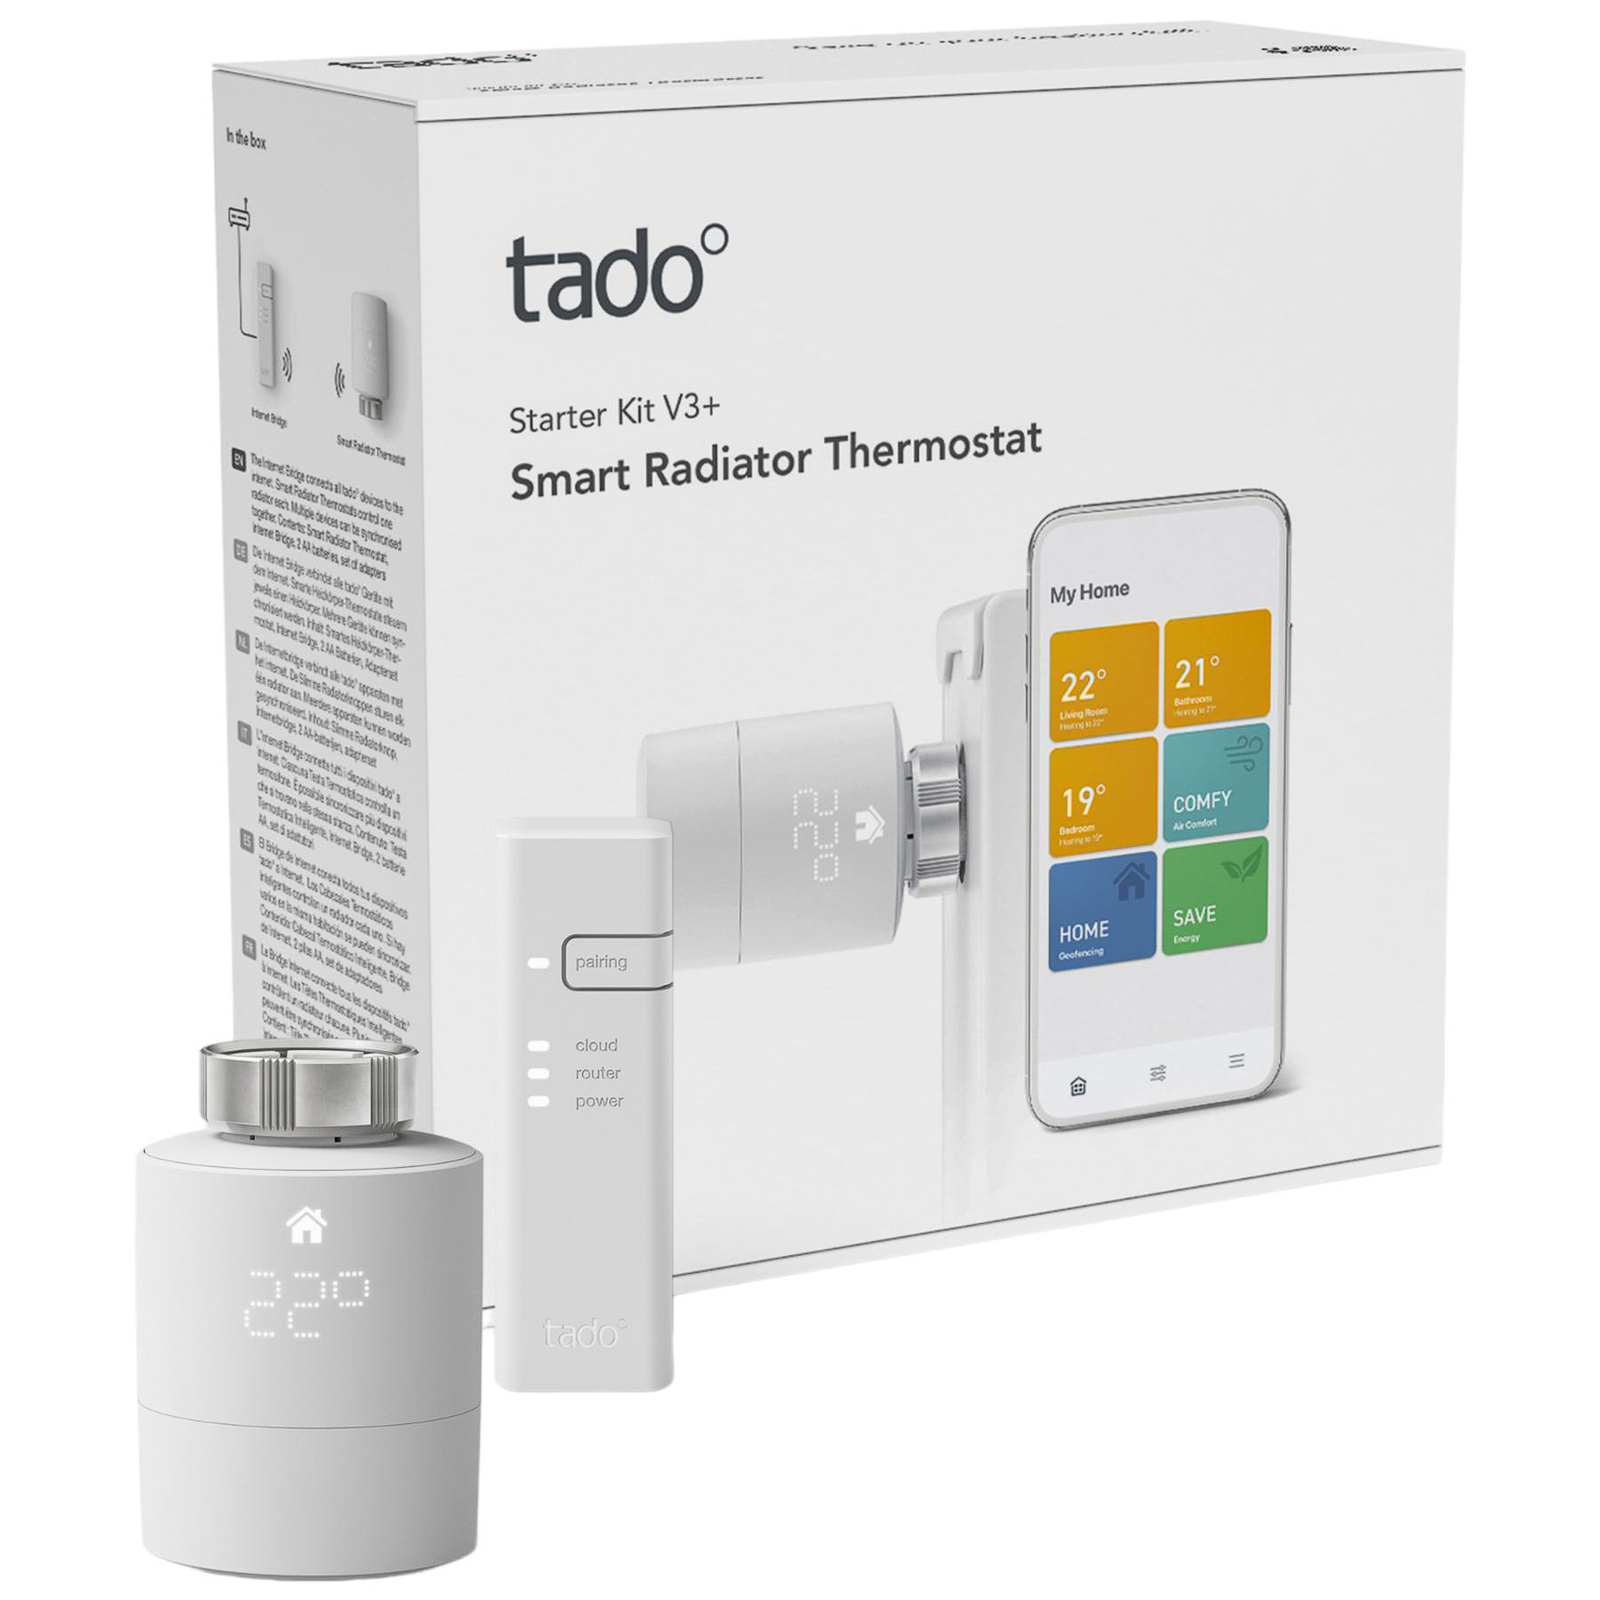 tado° starter kit with 9 radiator thermostats V3+